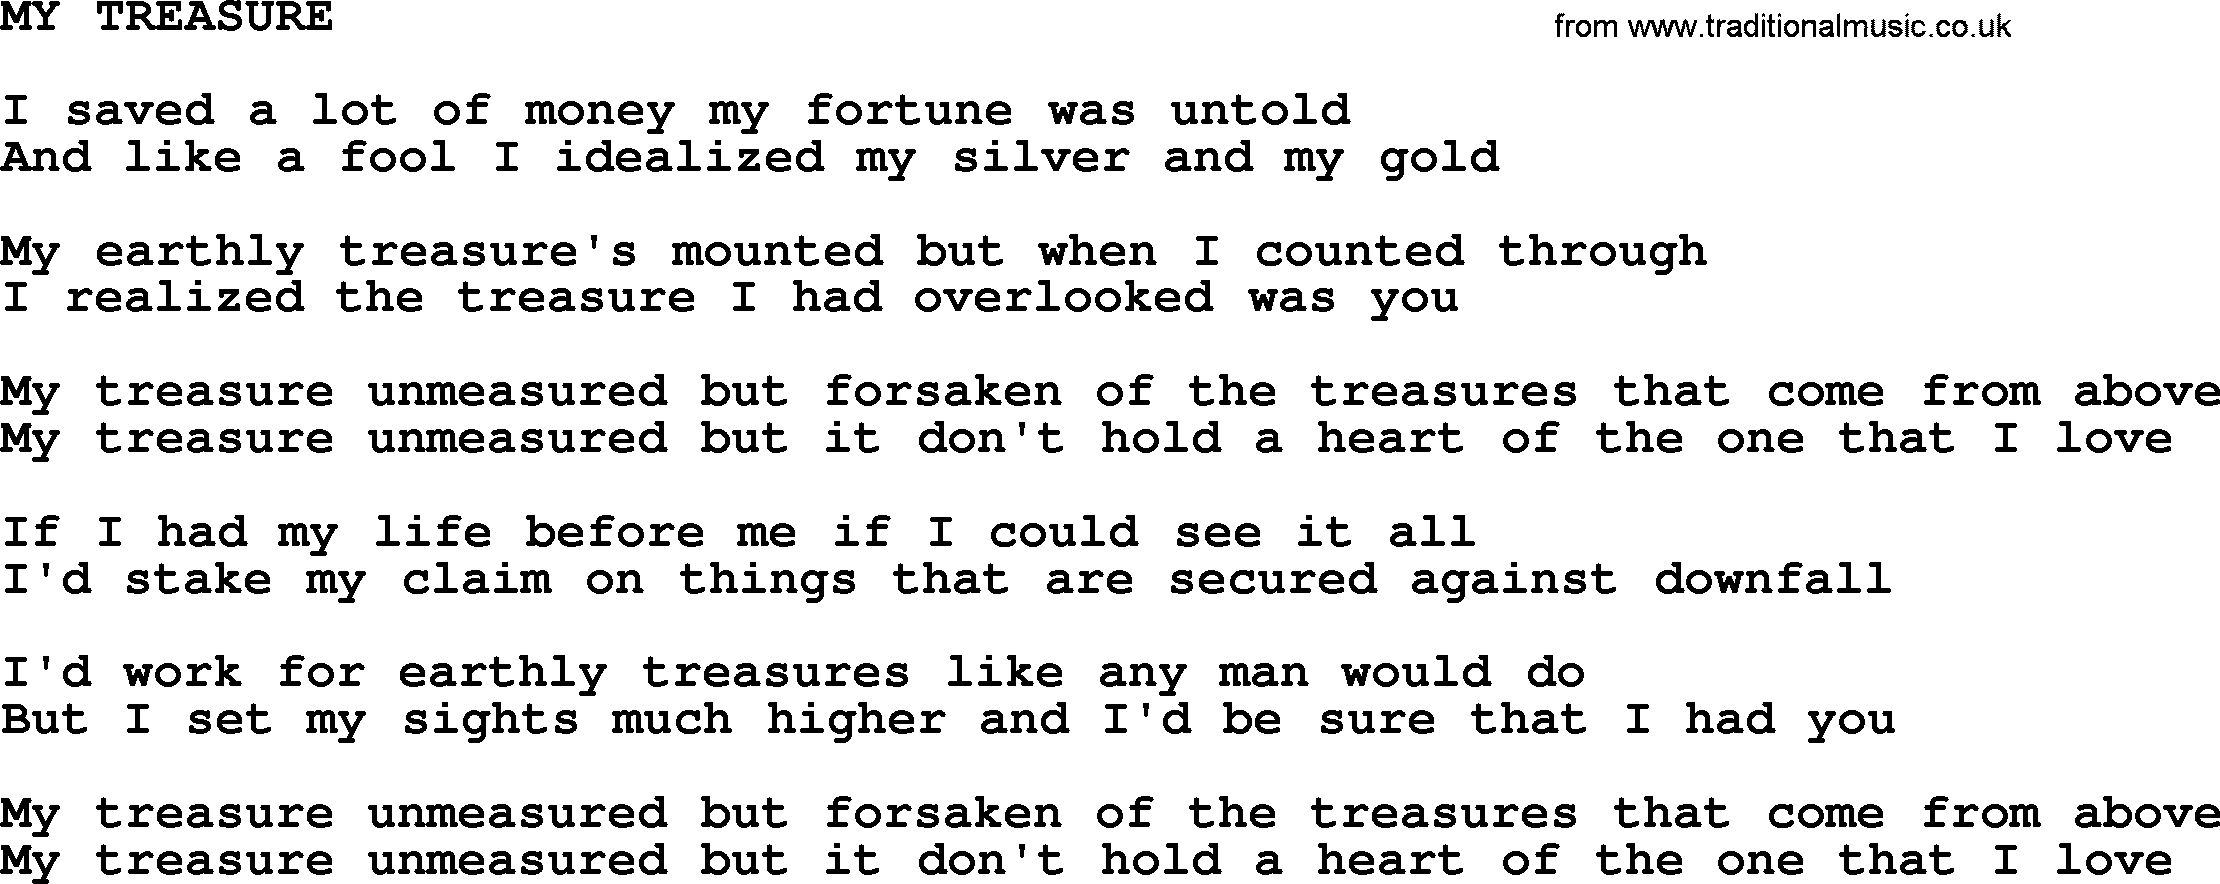 Johnny Cash song My Treasure.txt lyrics